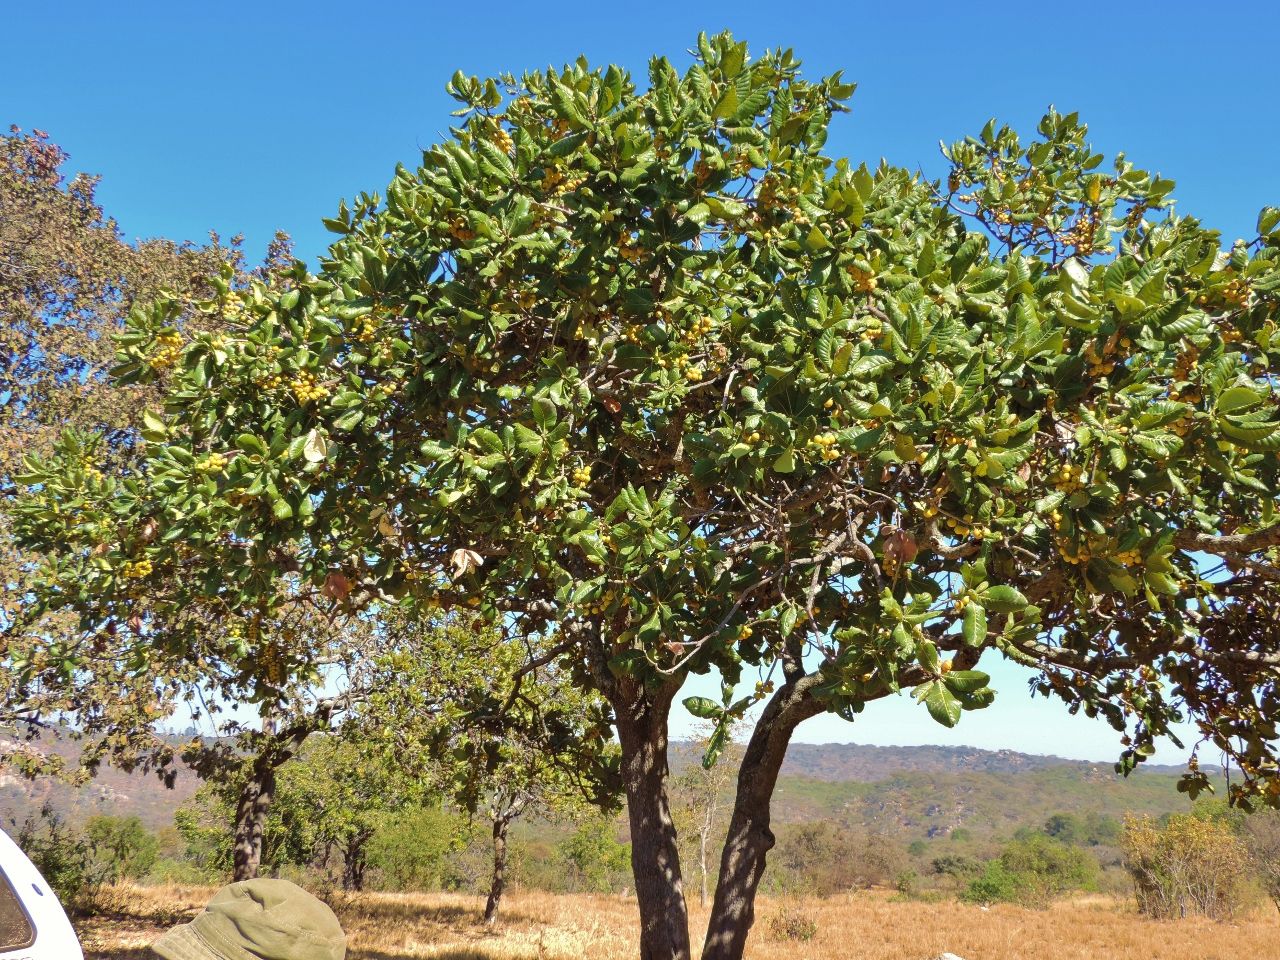 Uapaca kirkiana (Masuku) tree